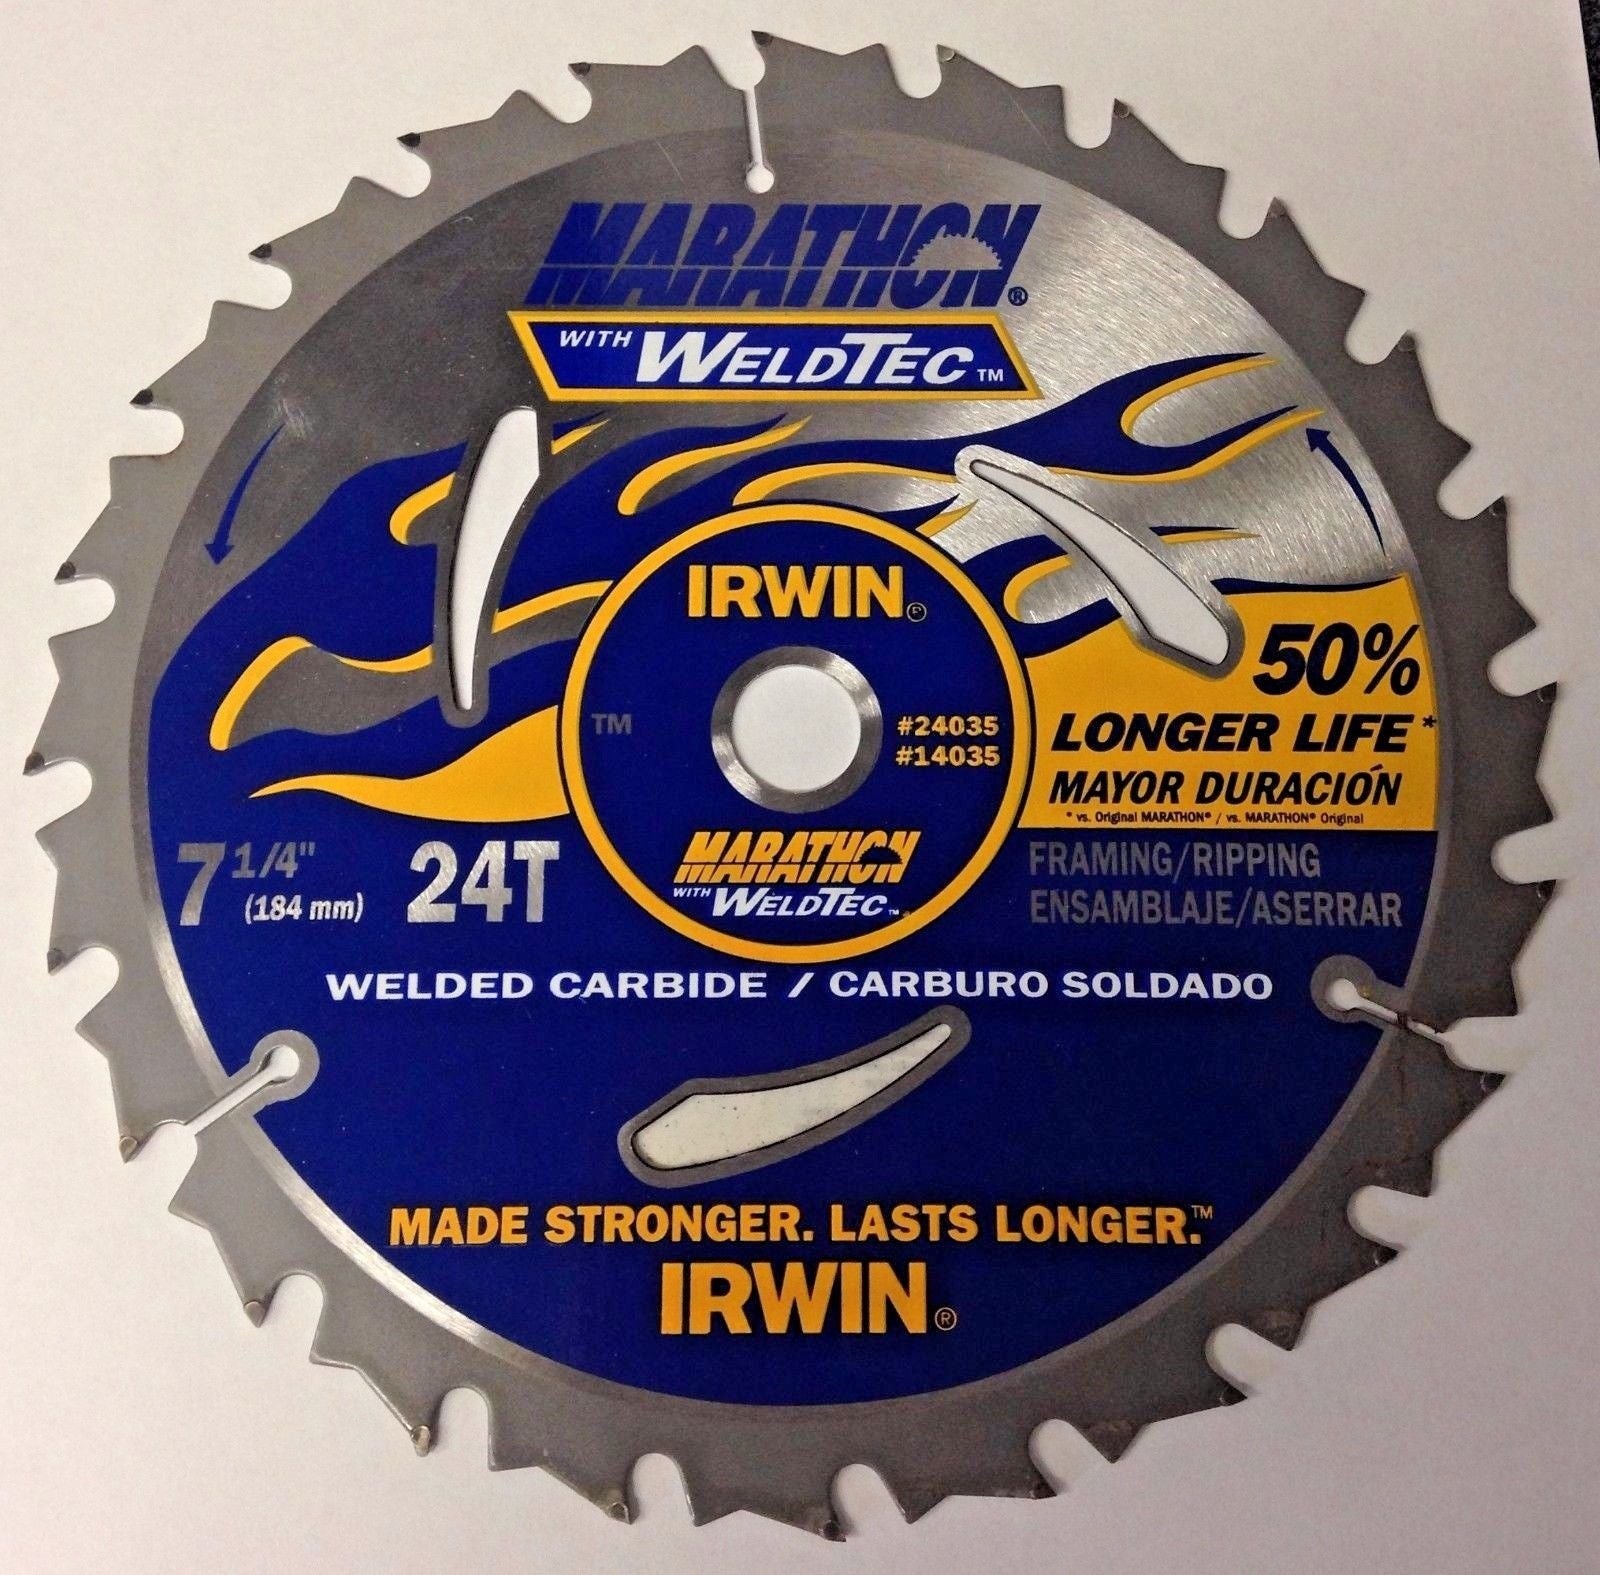 Irwin 24035 Weldtec 7-1/4" x 24 Carbide Tooth Circular Saw Blade